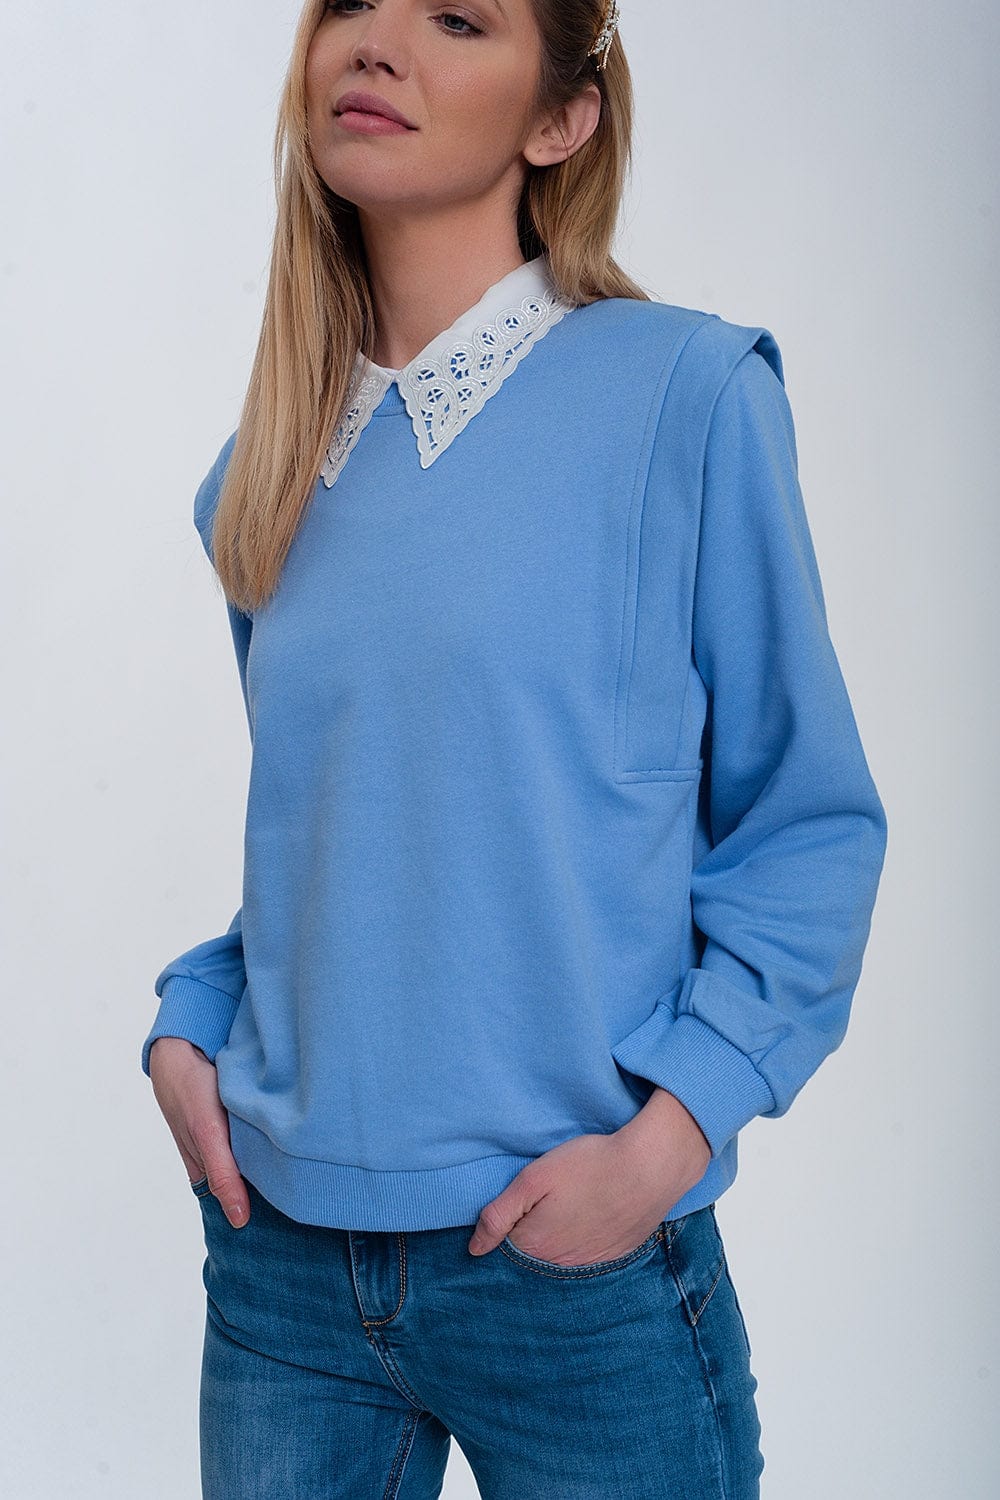 Q2 Women's Women's Sweatshirt Boyfriend Sweatshirt with Shoulder Details in Blue